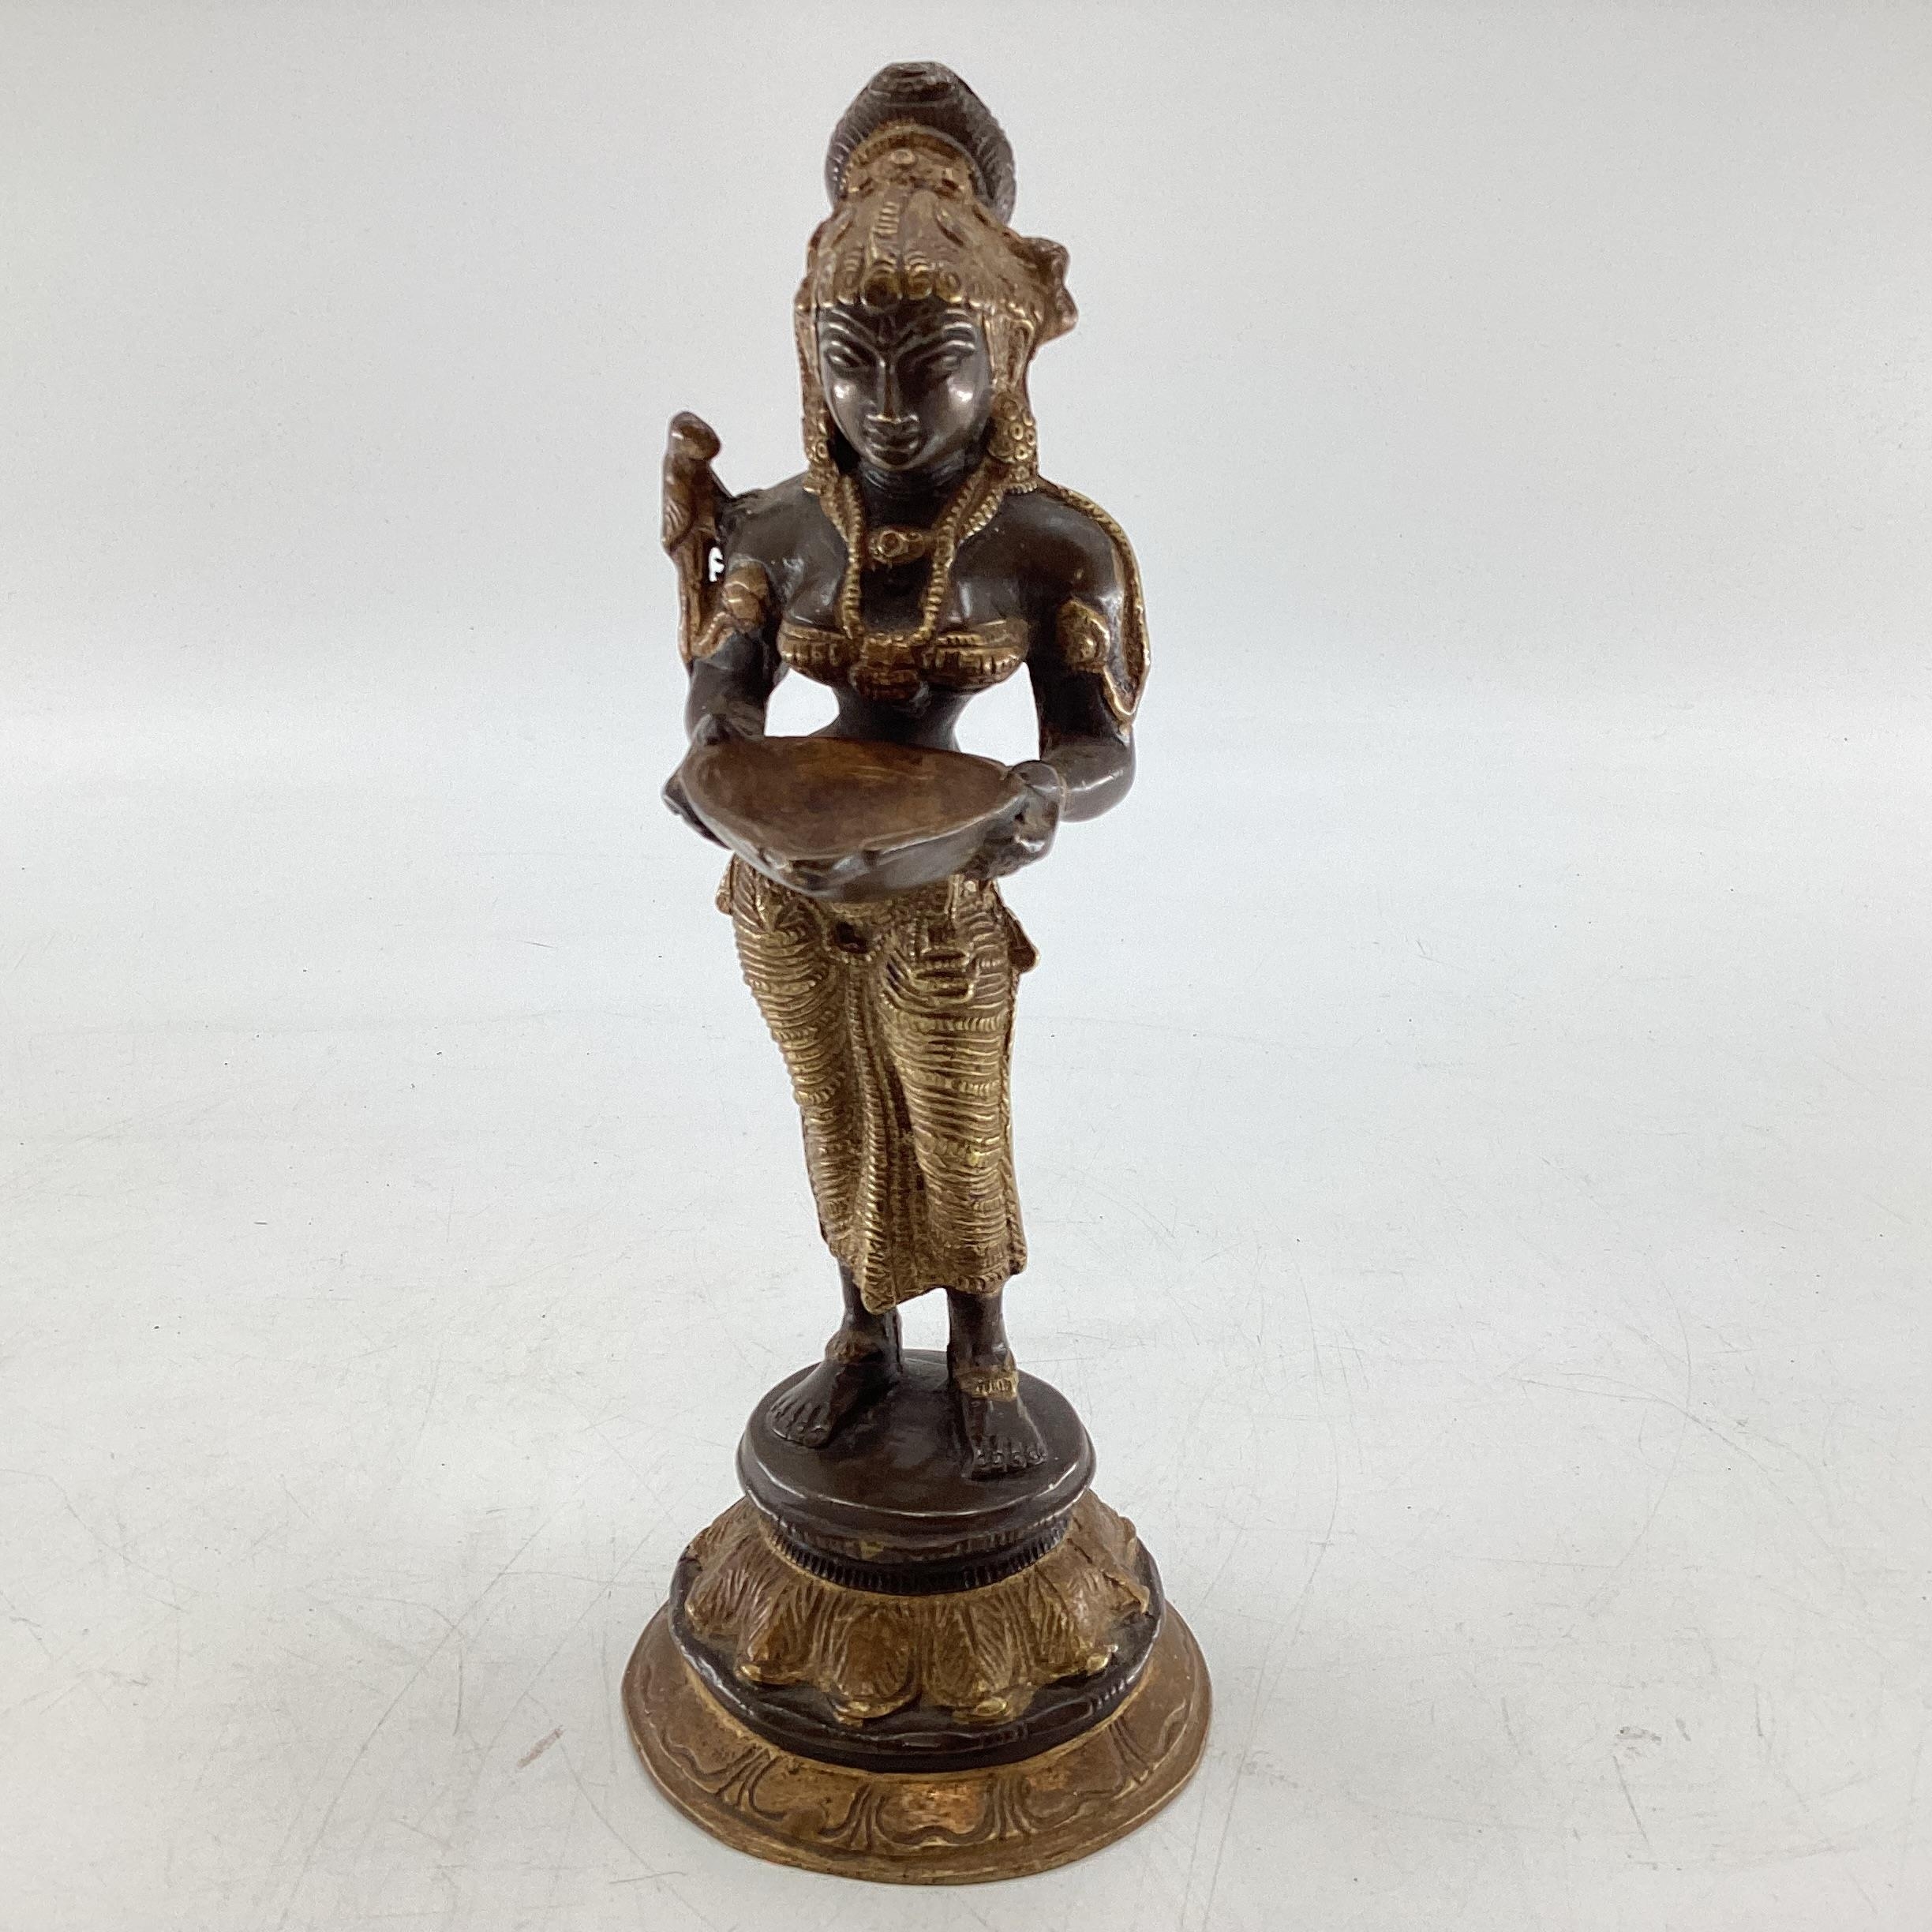 A South Asian bronze figure of Deepa Lakshmi (representation of the Hindu Goddess Lakshmi) symbol of